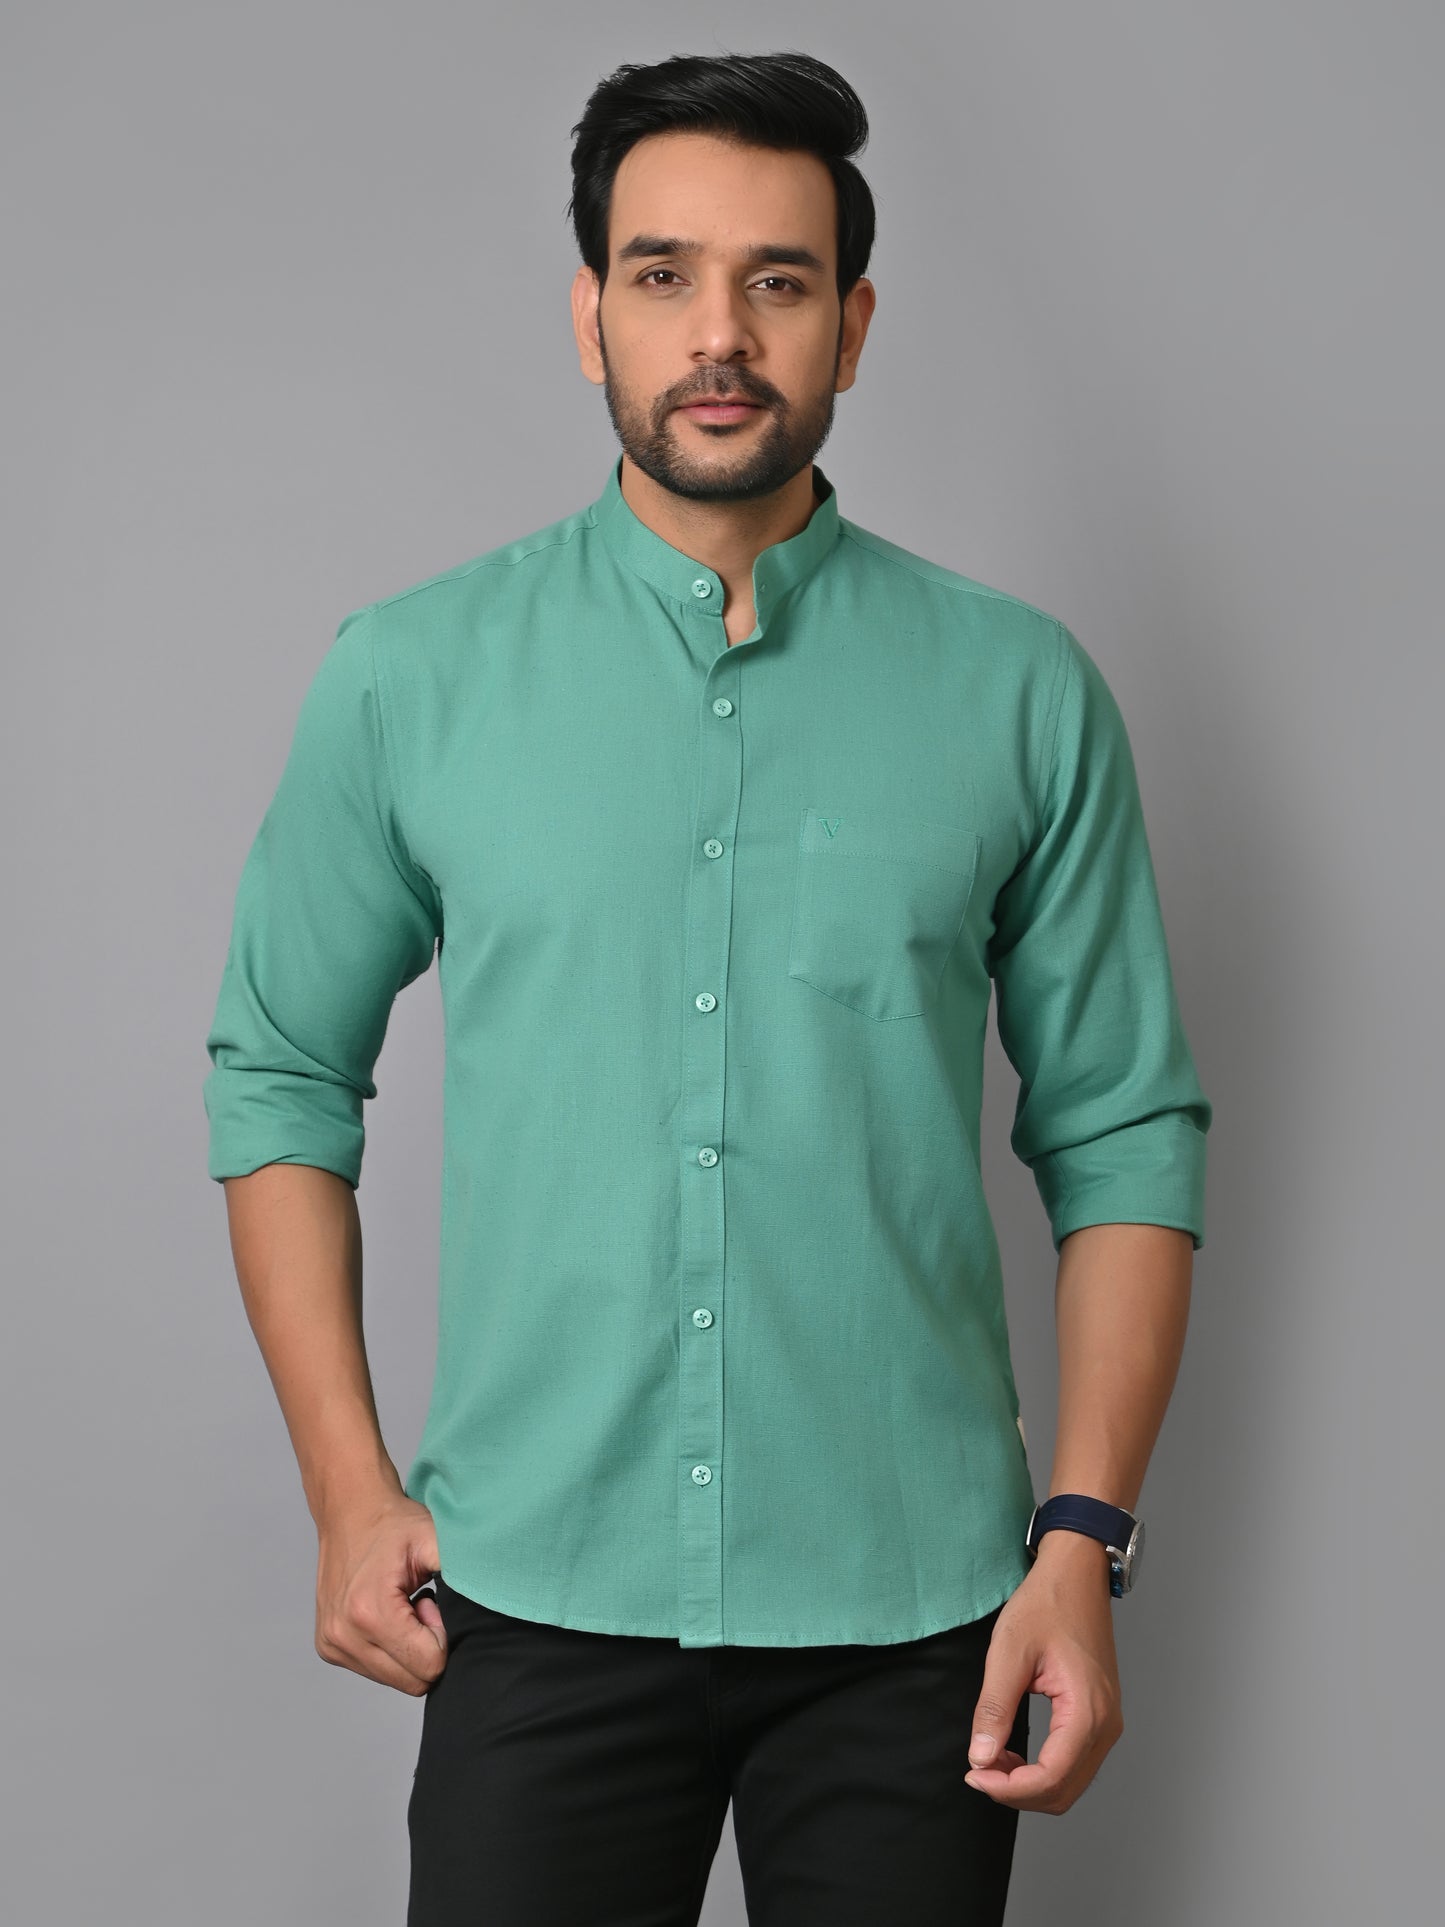 VJR Pearl Green Solid Shirt